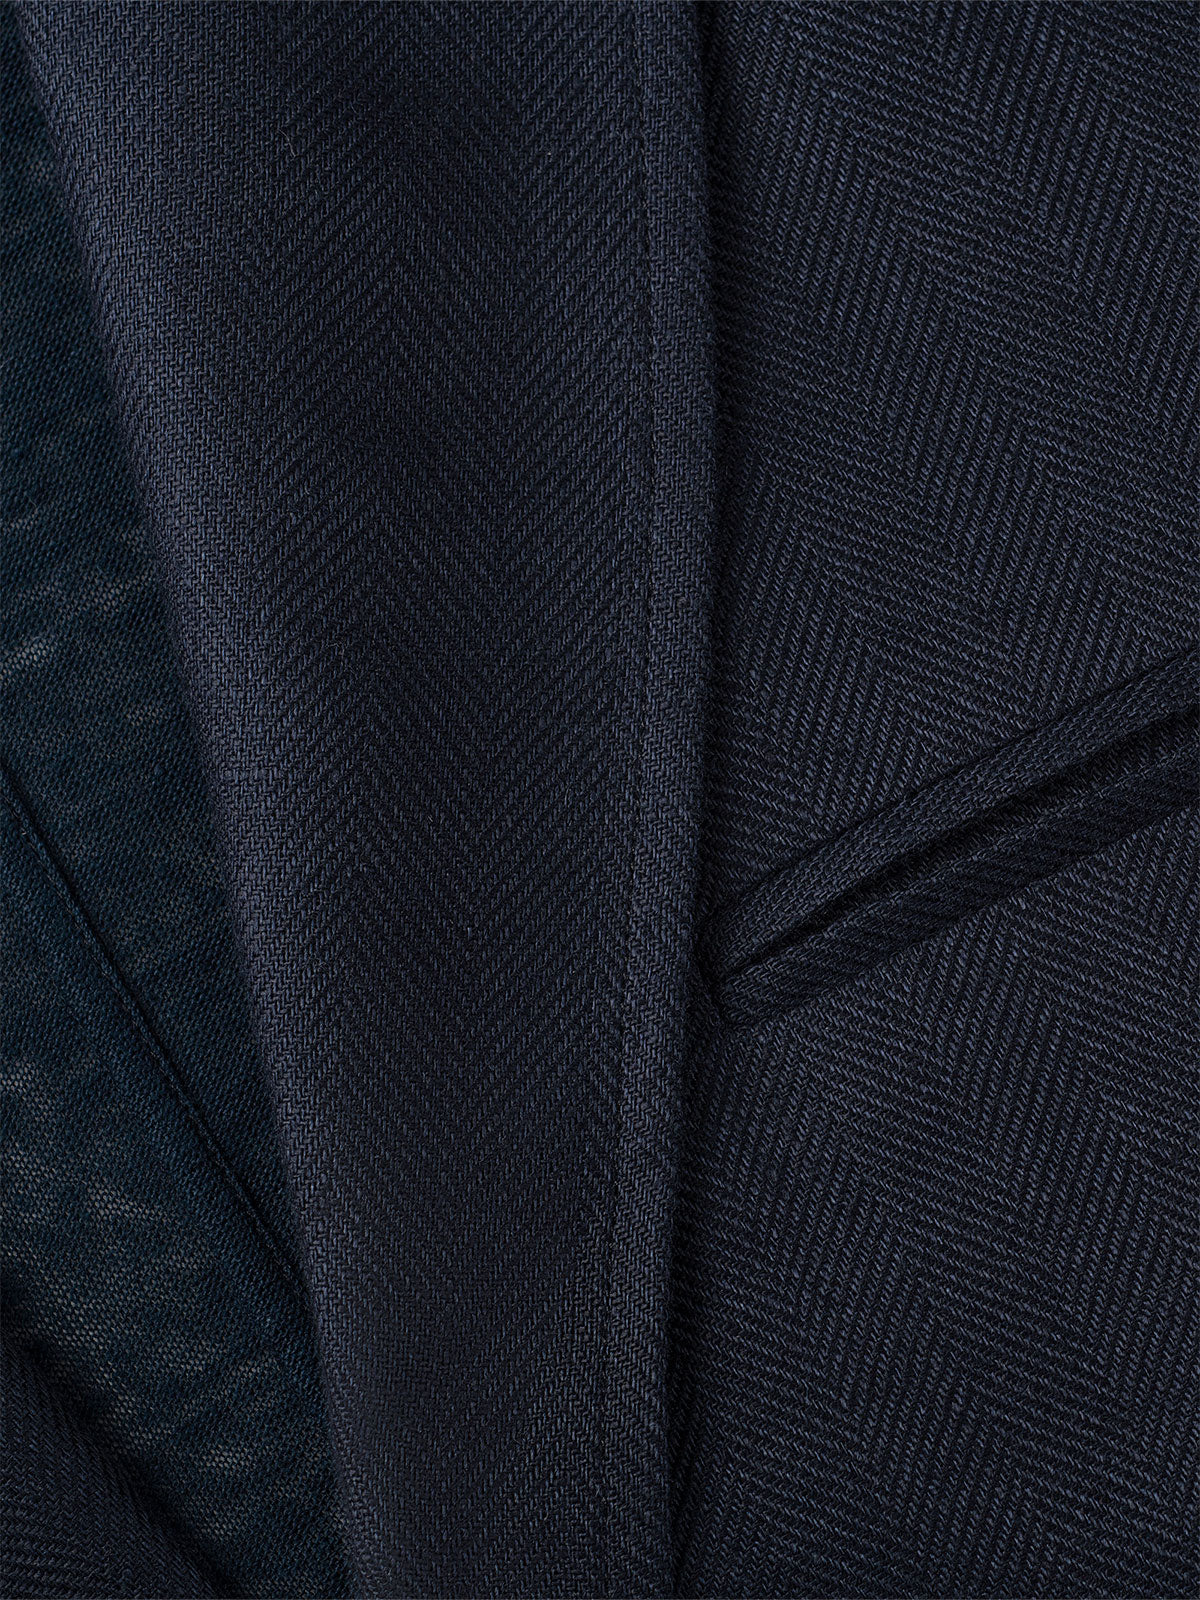 Giacca Sud Man 100% Capri blue linen jacket detail